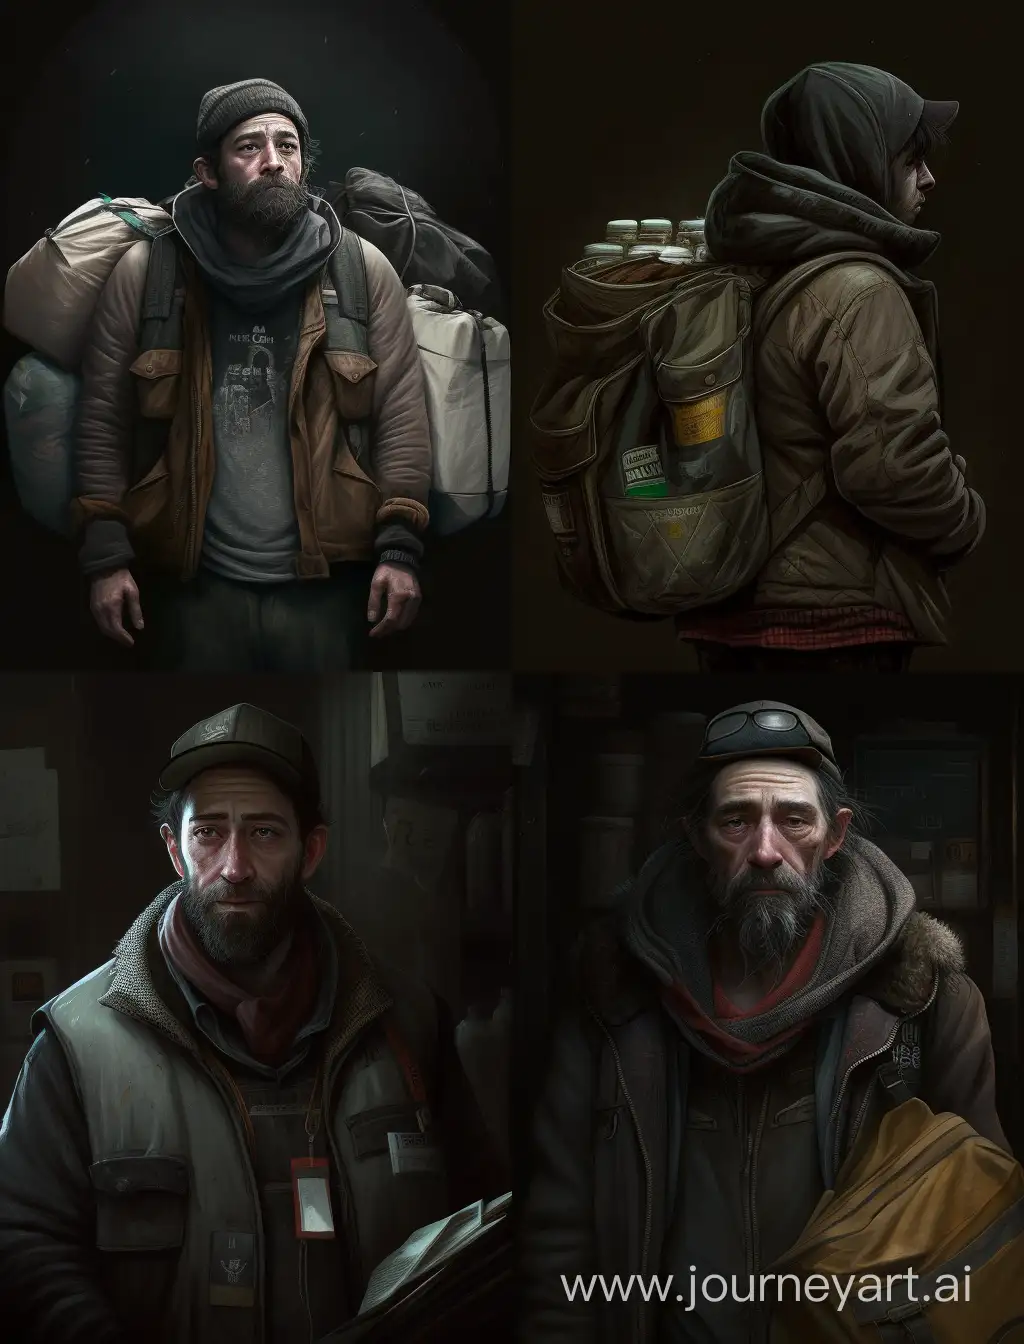 Trader-Unloading-Vest-A-35YearOld-Man-in-Dark-Cap-and-Jacket